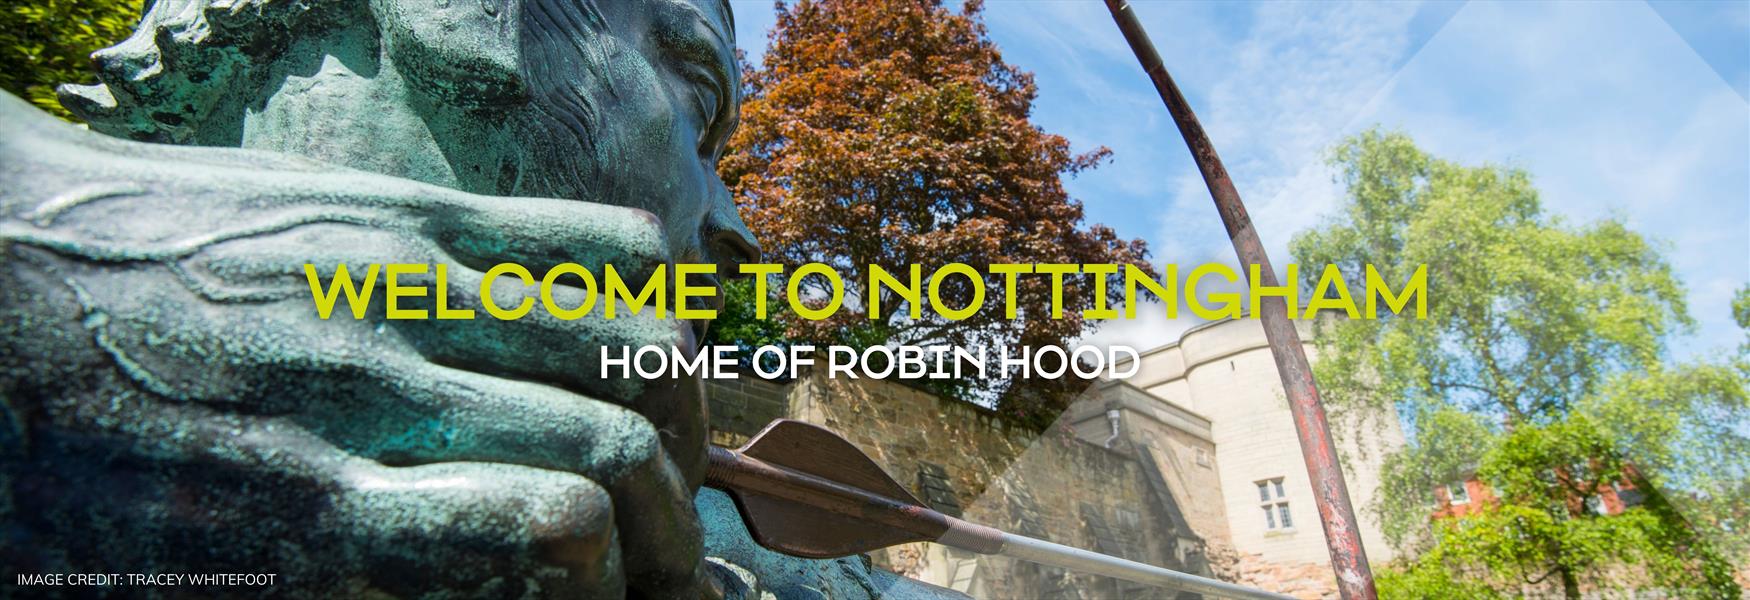 nottingham university tourism